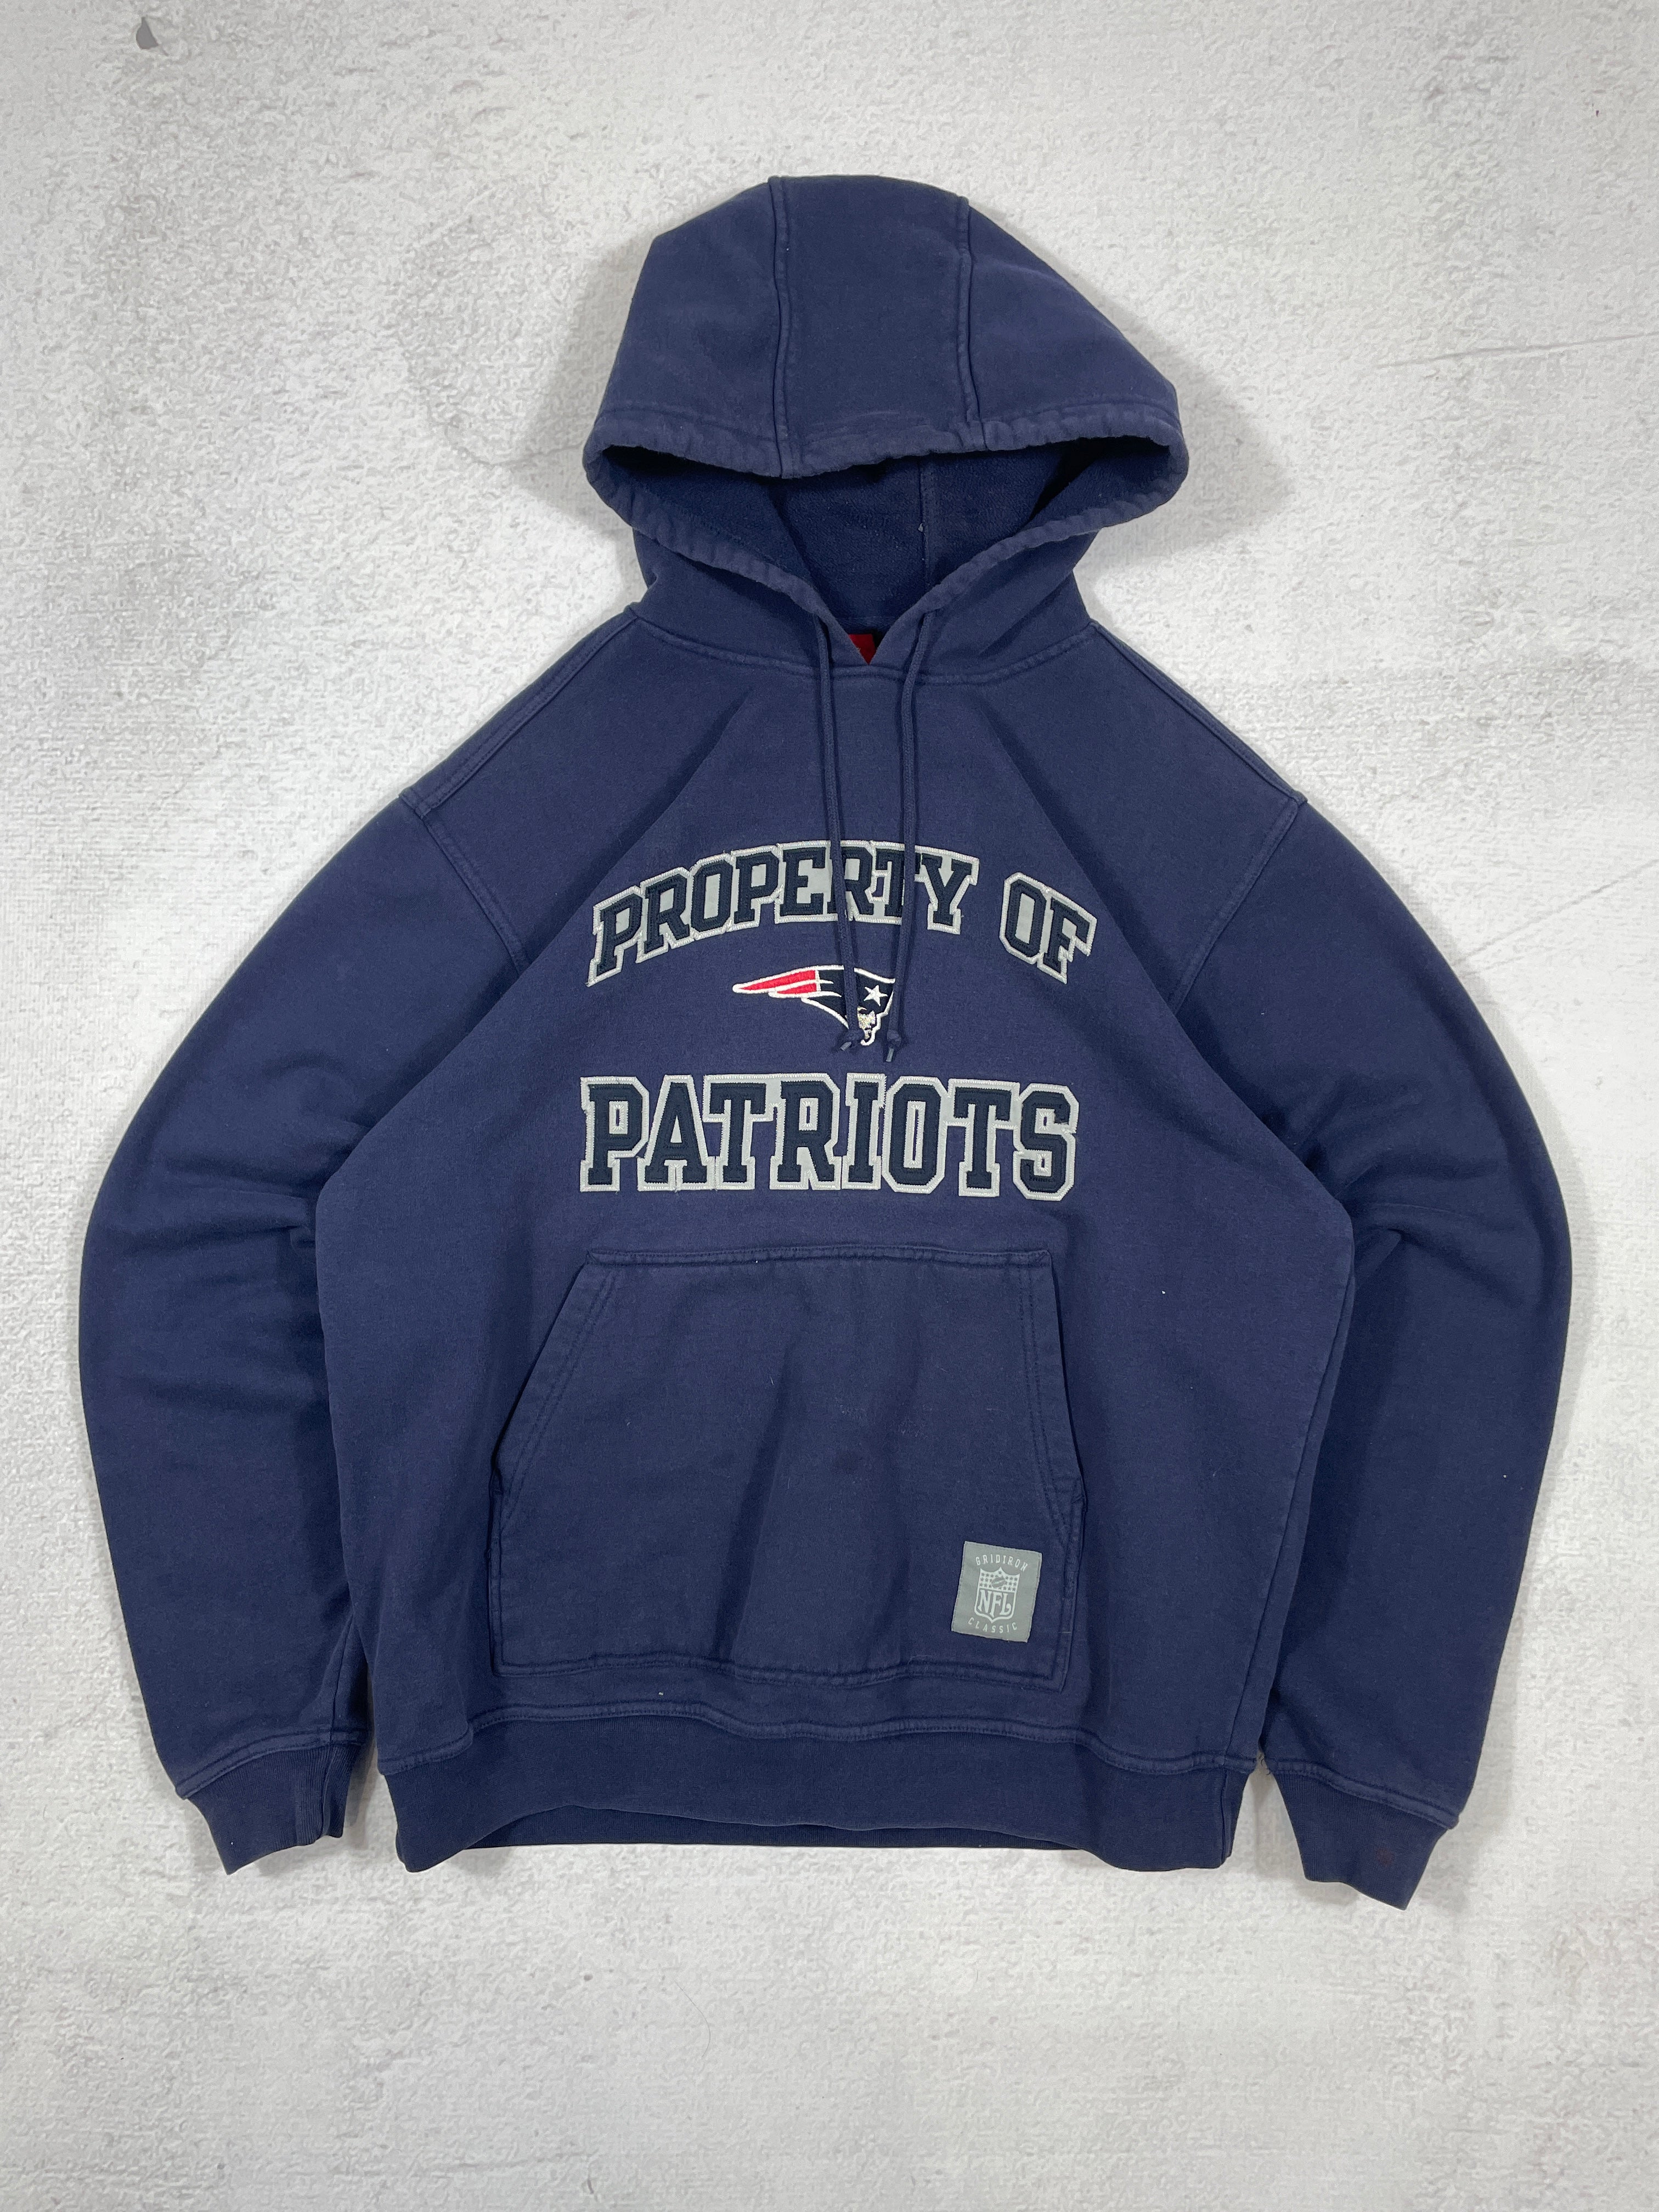 Vintage NFL New England Patriots Hoodie - Men's Medium